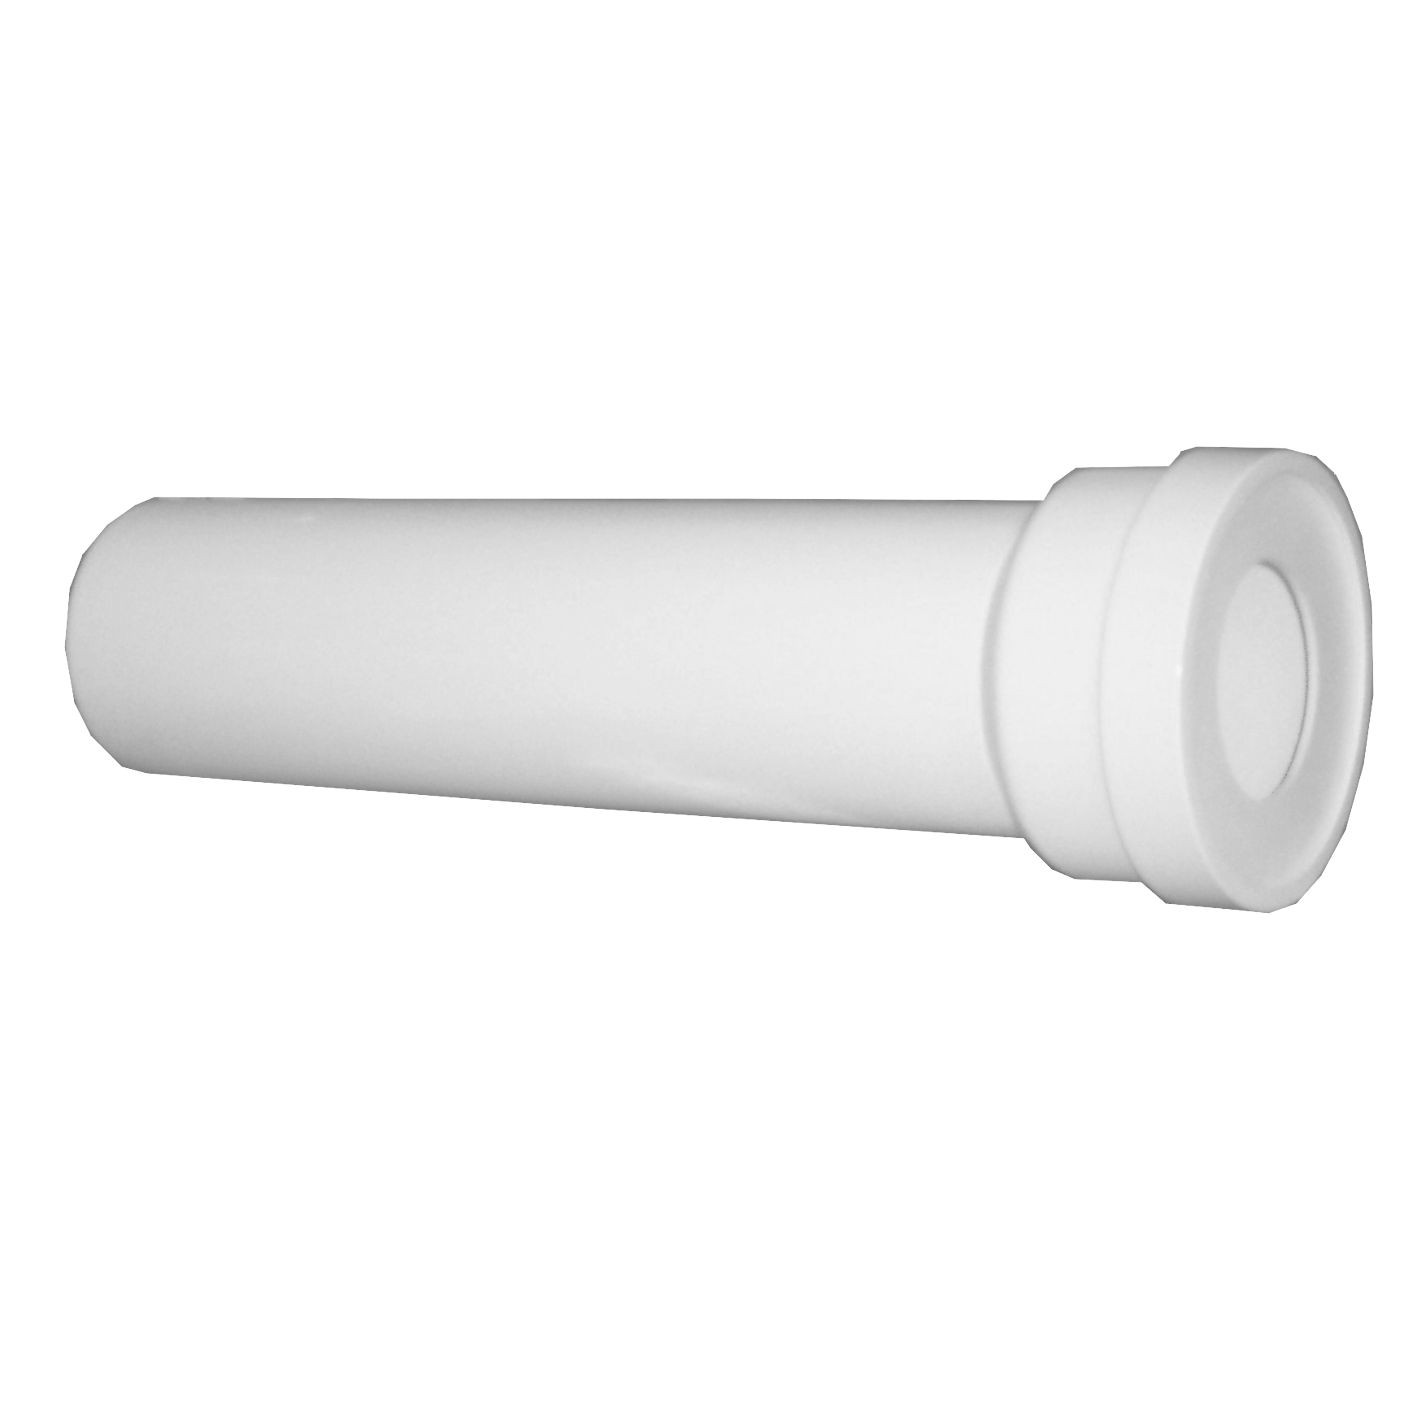 Manicotto lungo per WC maschio diametro 100, 40 cm